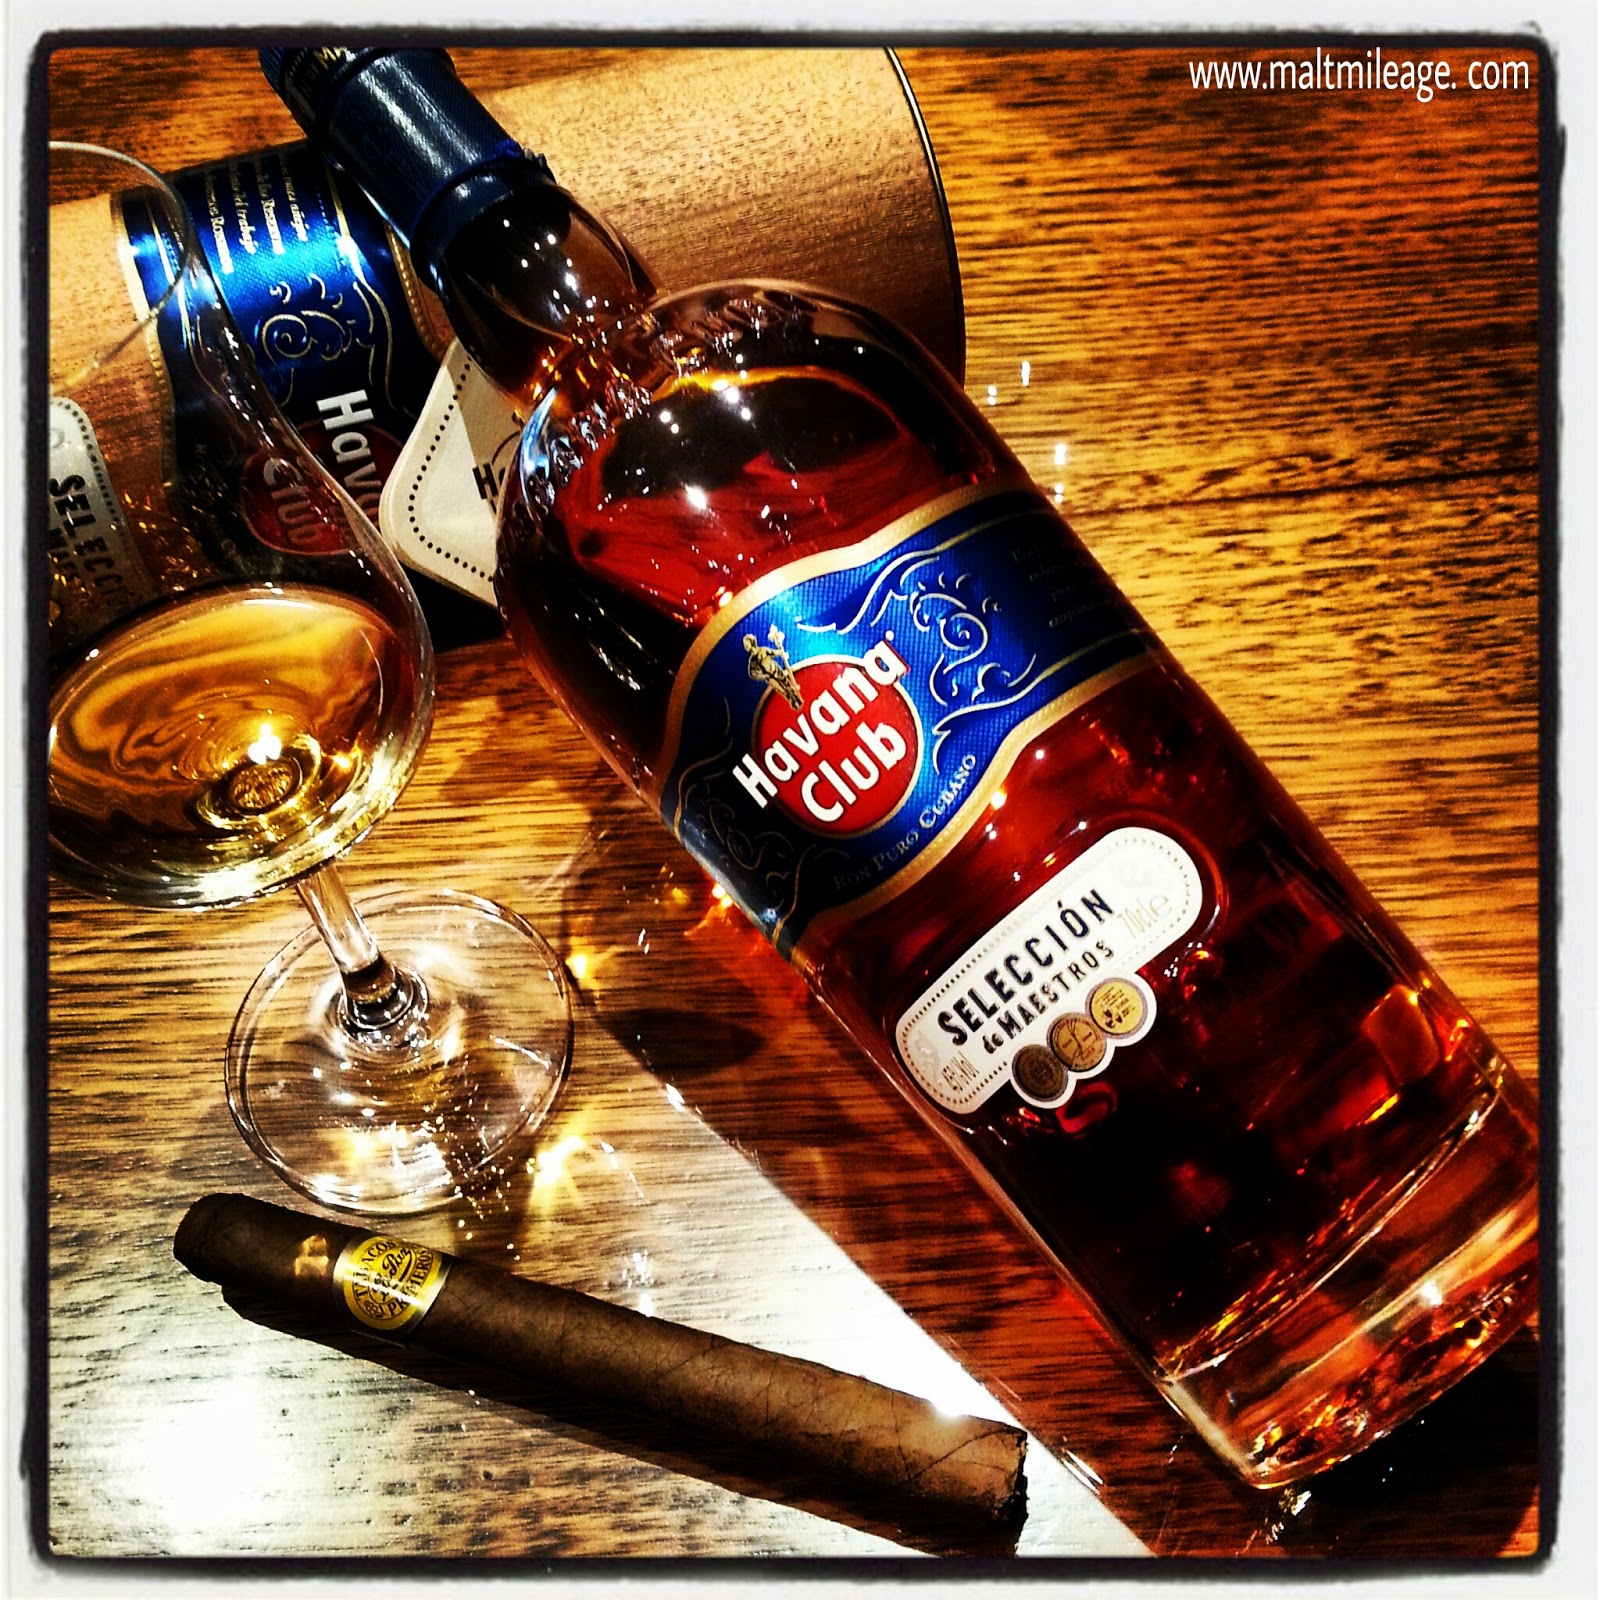 Malt Mileage - Whisky & Spirit Reviews: Havana Club Seleccion de Maestros